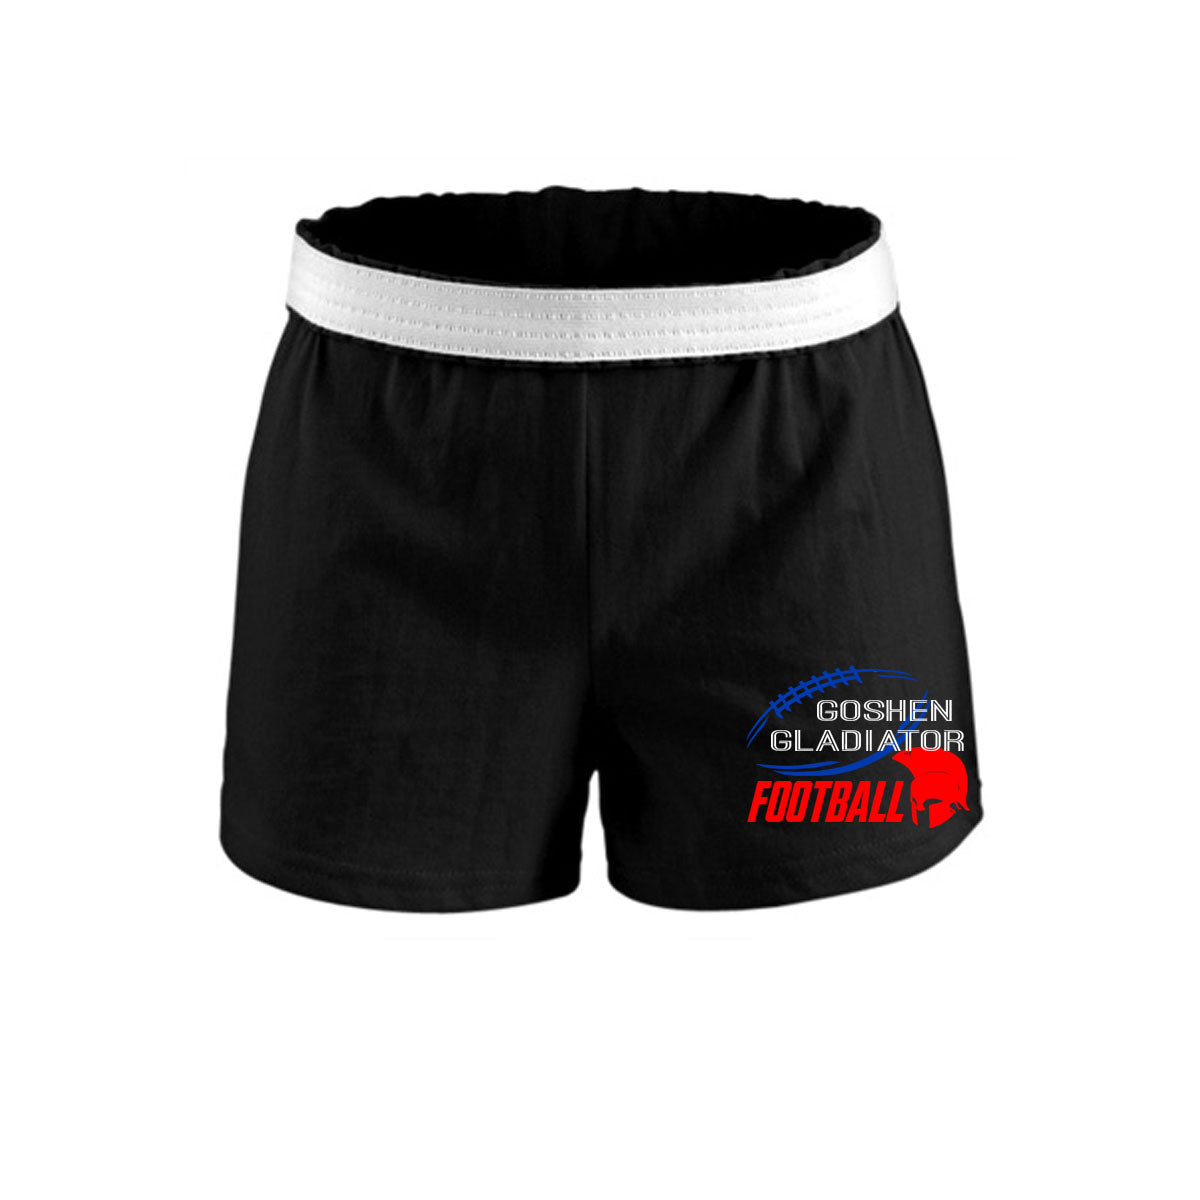 Goshen Football Design 6 Shorts